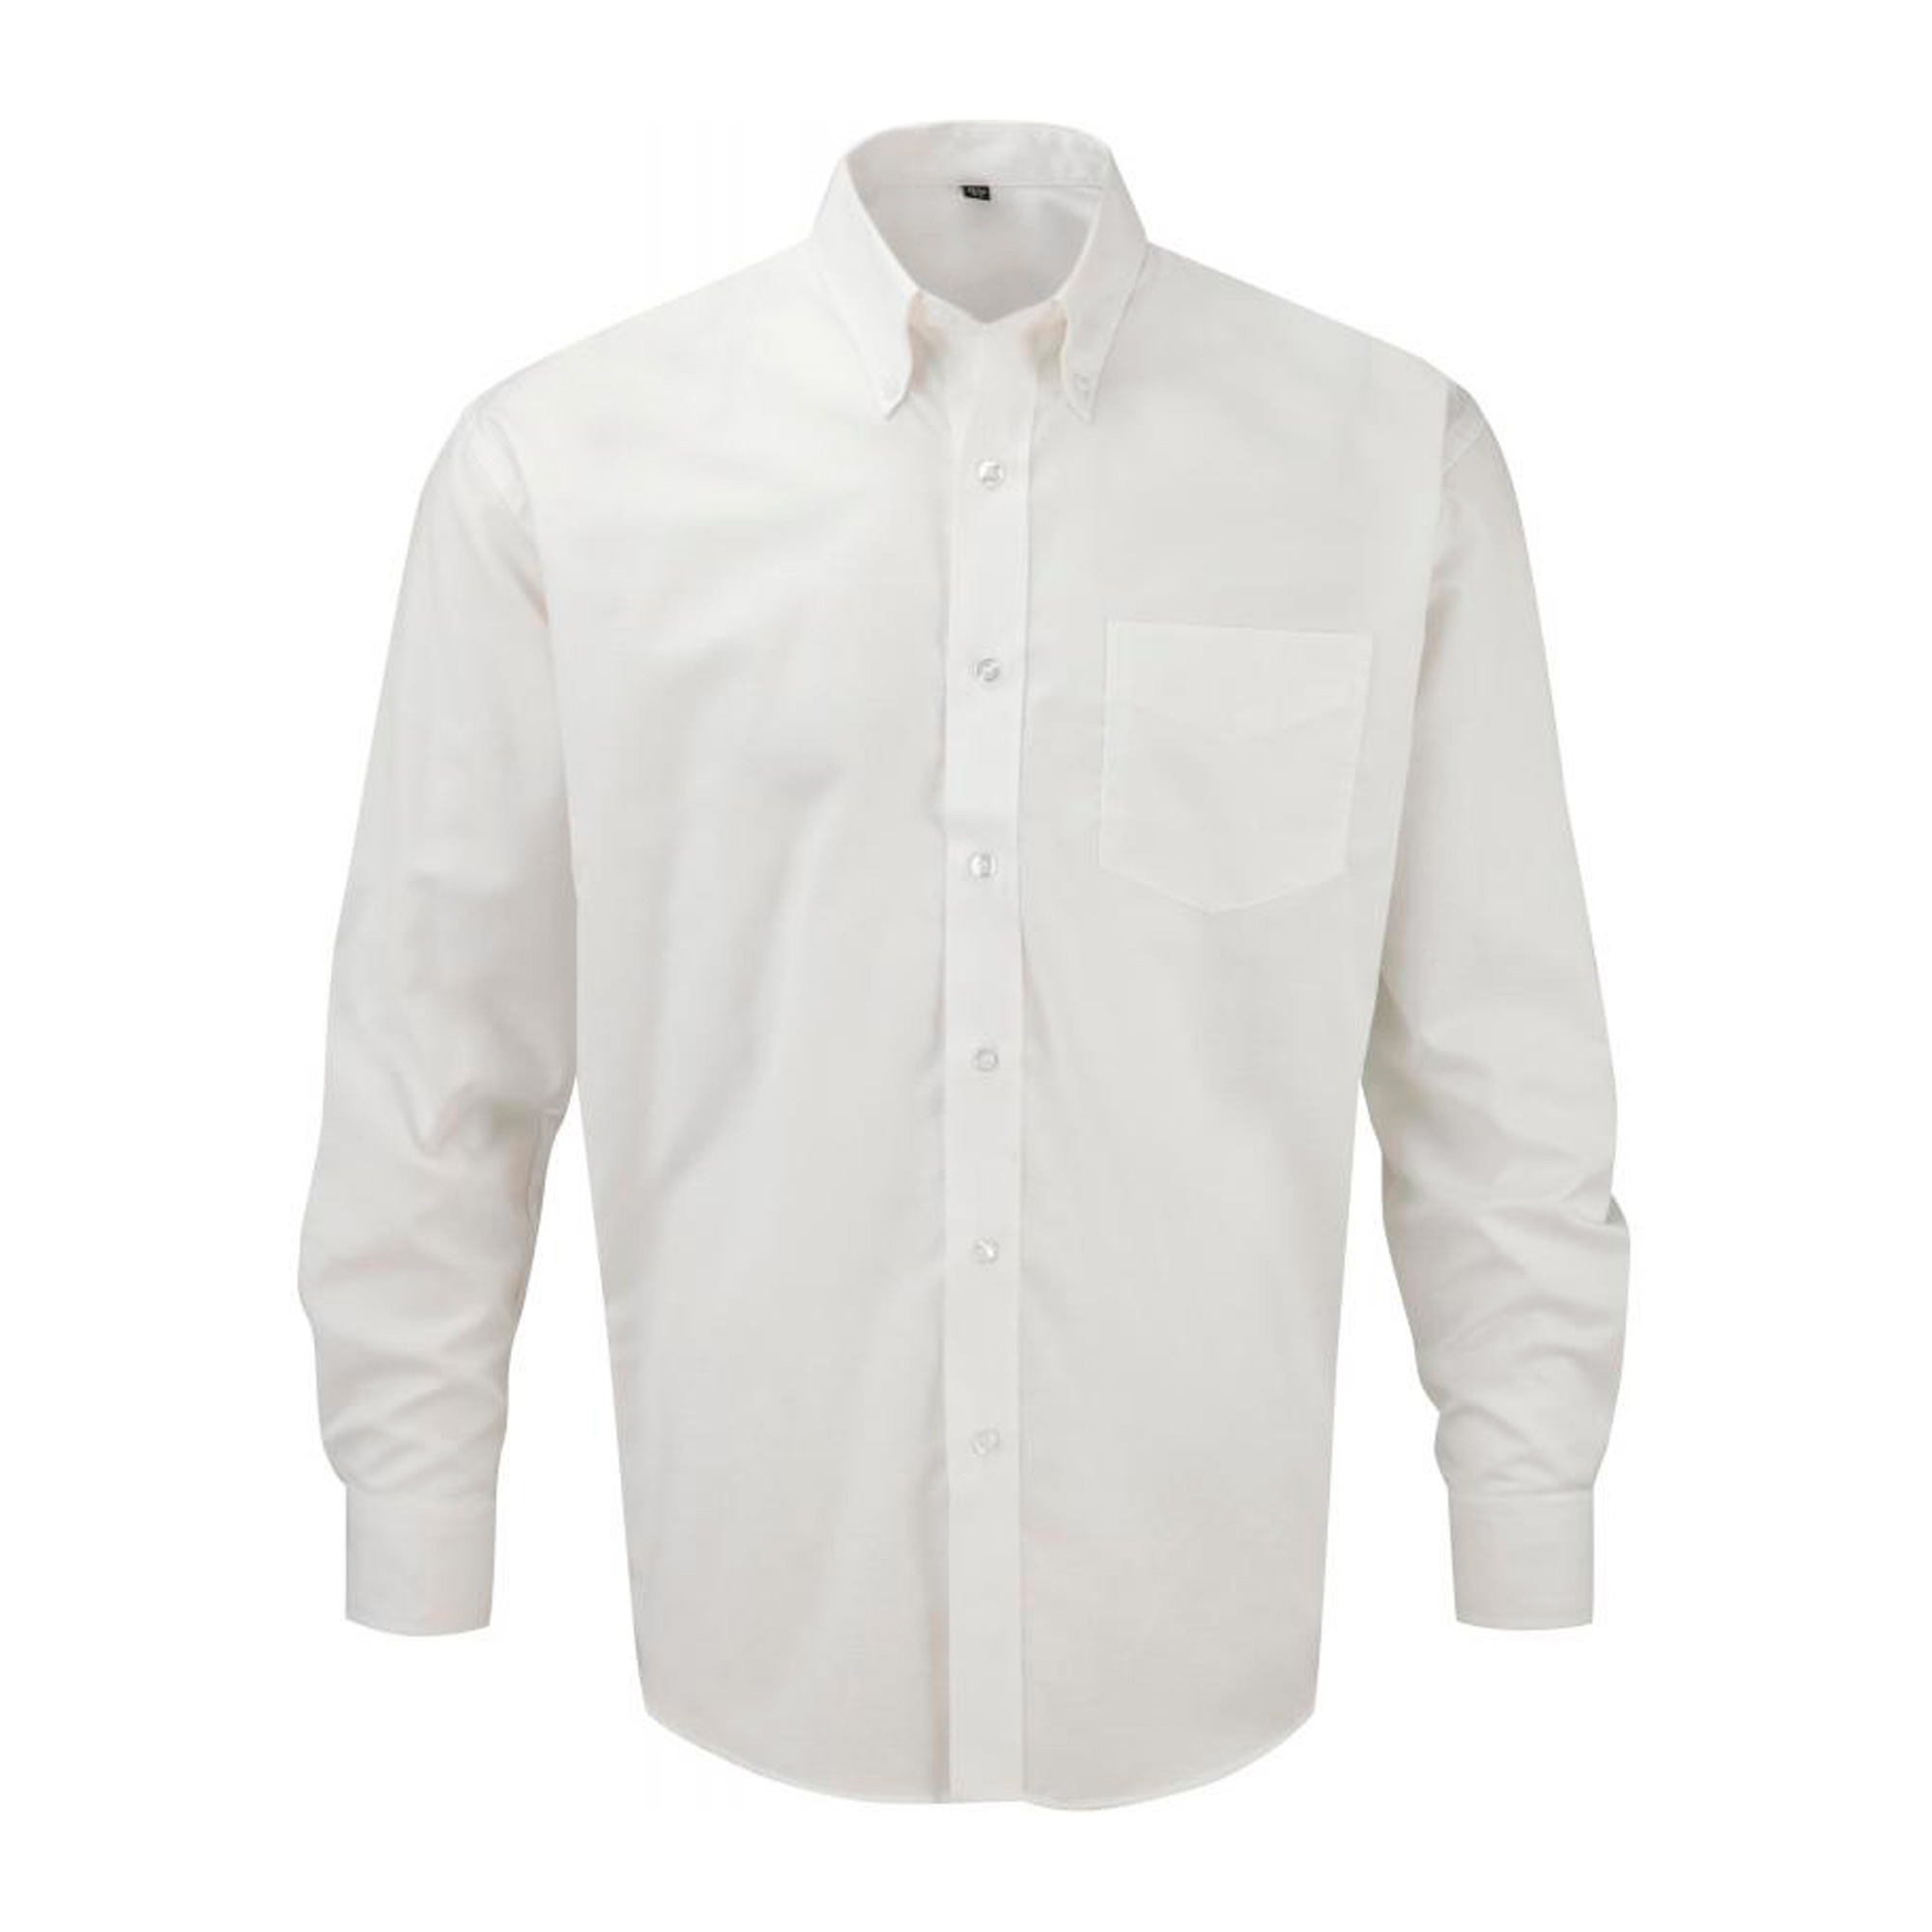 Camisa blanca de manga larga para hombre, camisas de oficina